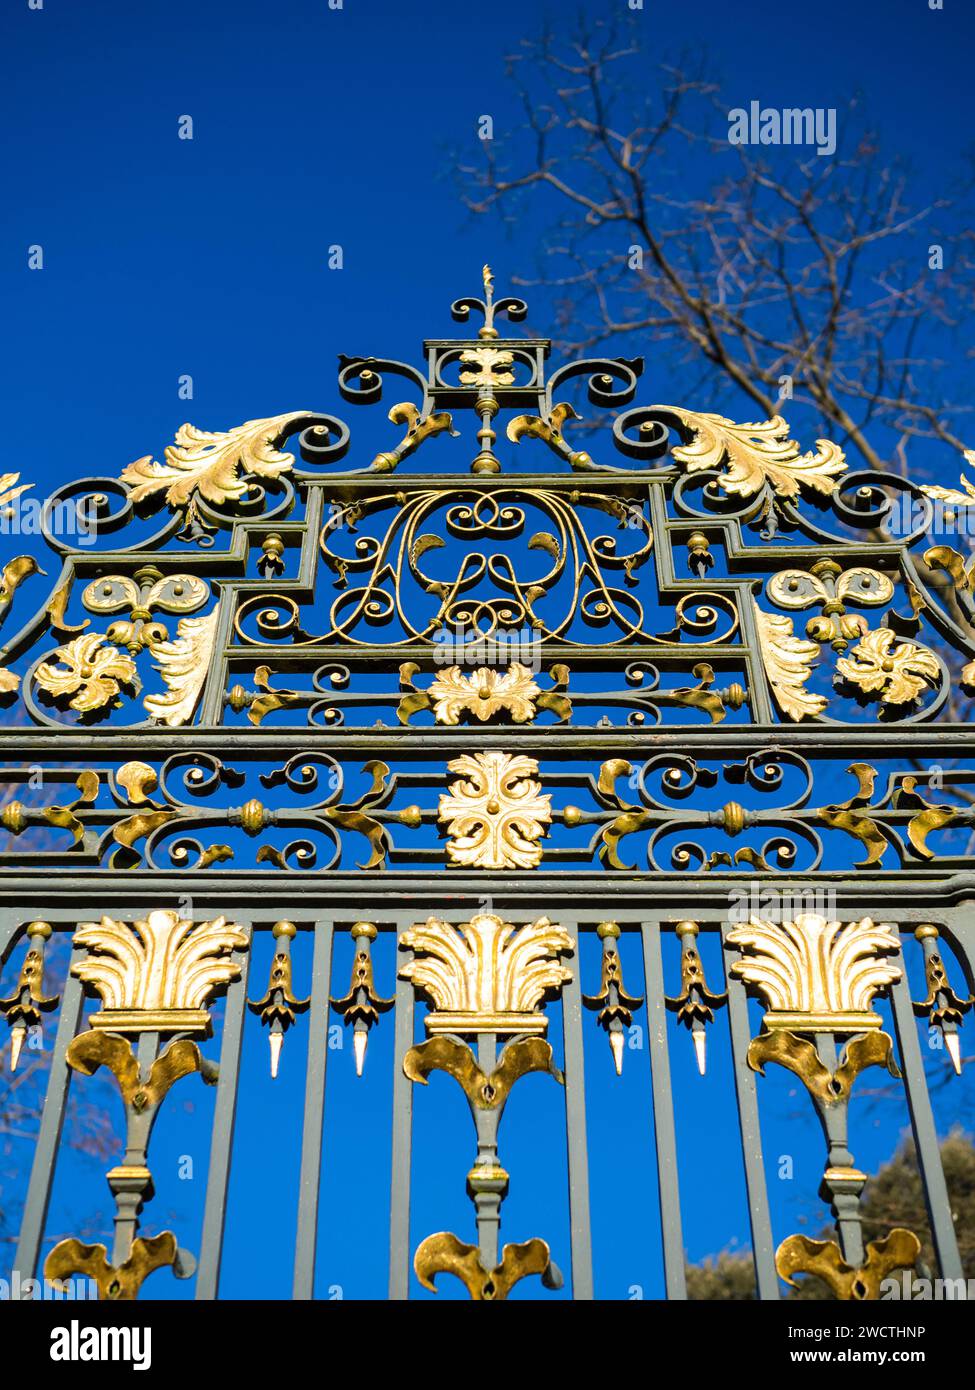 Gold Gates, Fenton House, Hampstead, Camden, London, England, UK, GB. Stock Photo